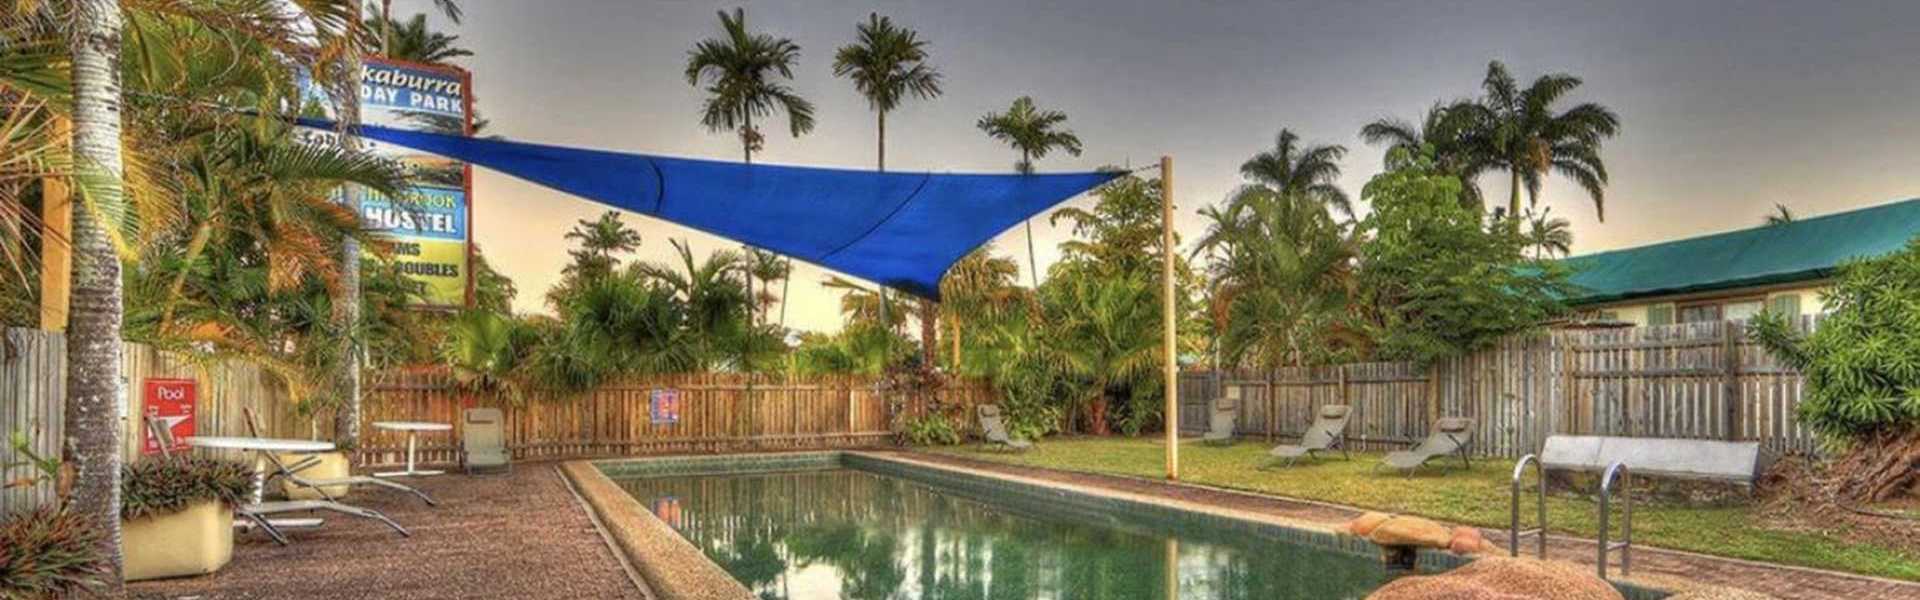 Kookaburra Holiday Park Banner Pool